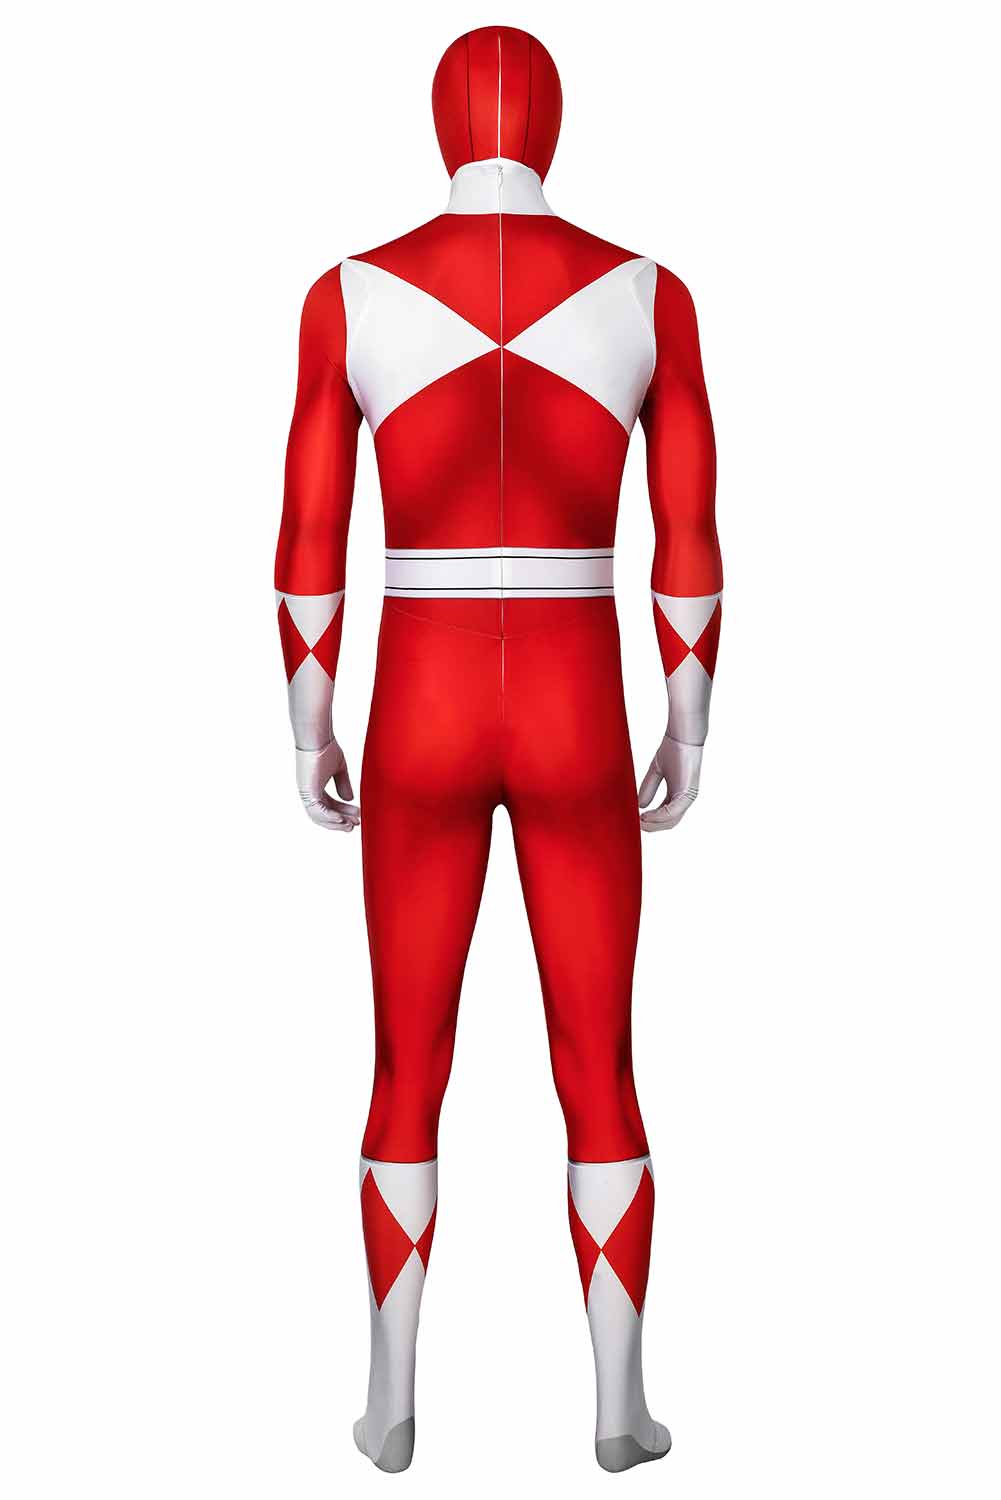 Power Rangers : Mighty Morphin Ranger Rouge Cosplay Costume